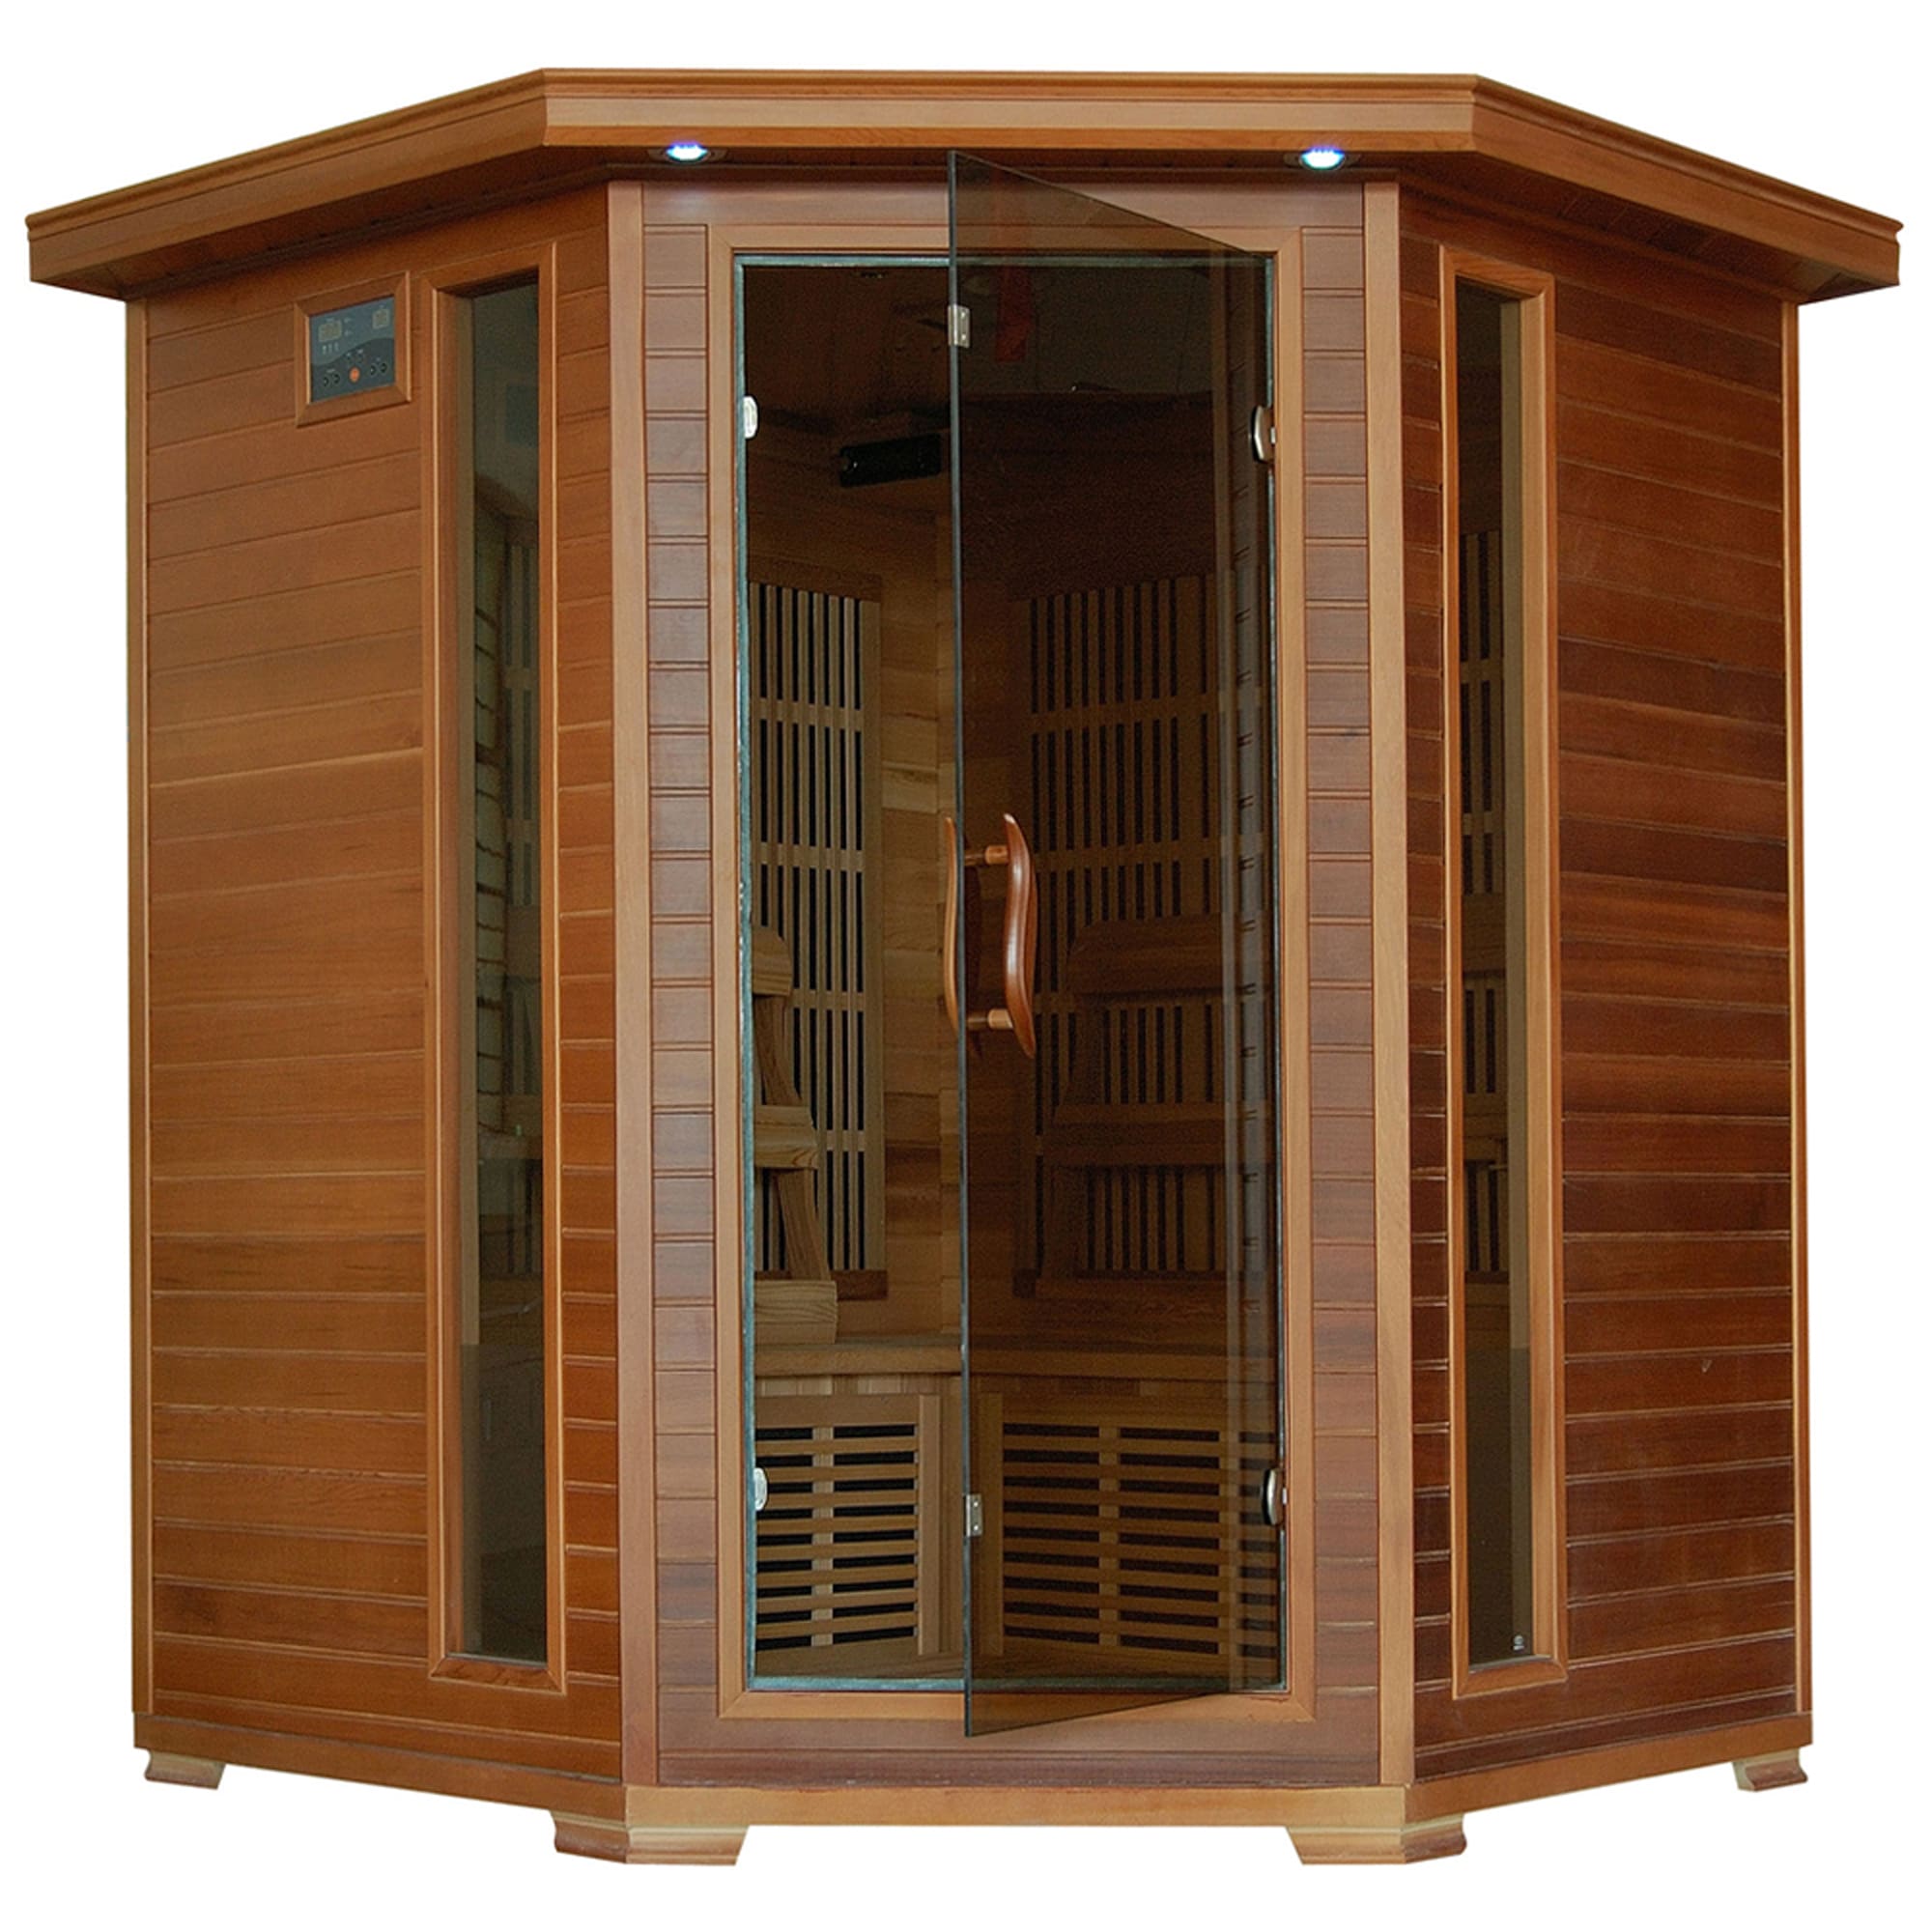 Sauna seat cushion, sauna seat cover, sauna cushion, sauna accessories,  wood seat for sauna, plywood seat, sexy decor, sauna sexy decor